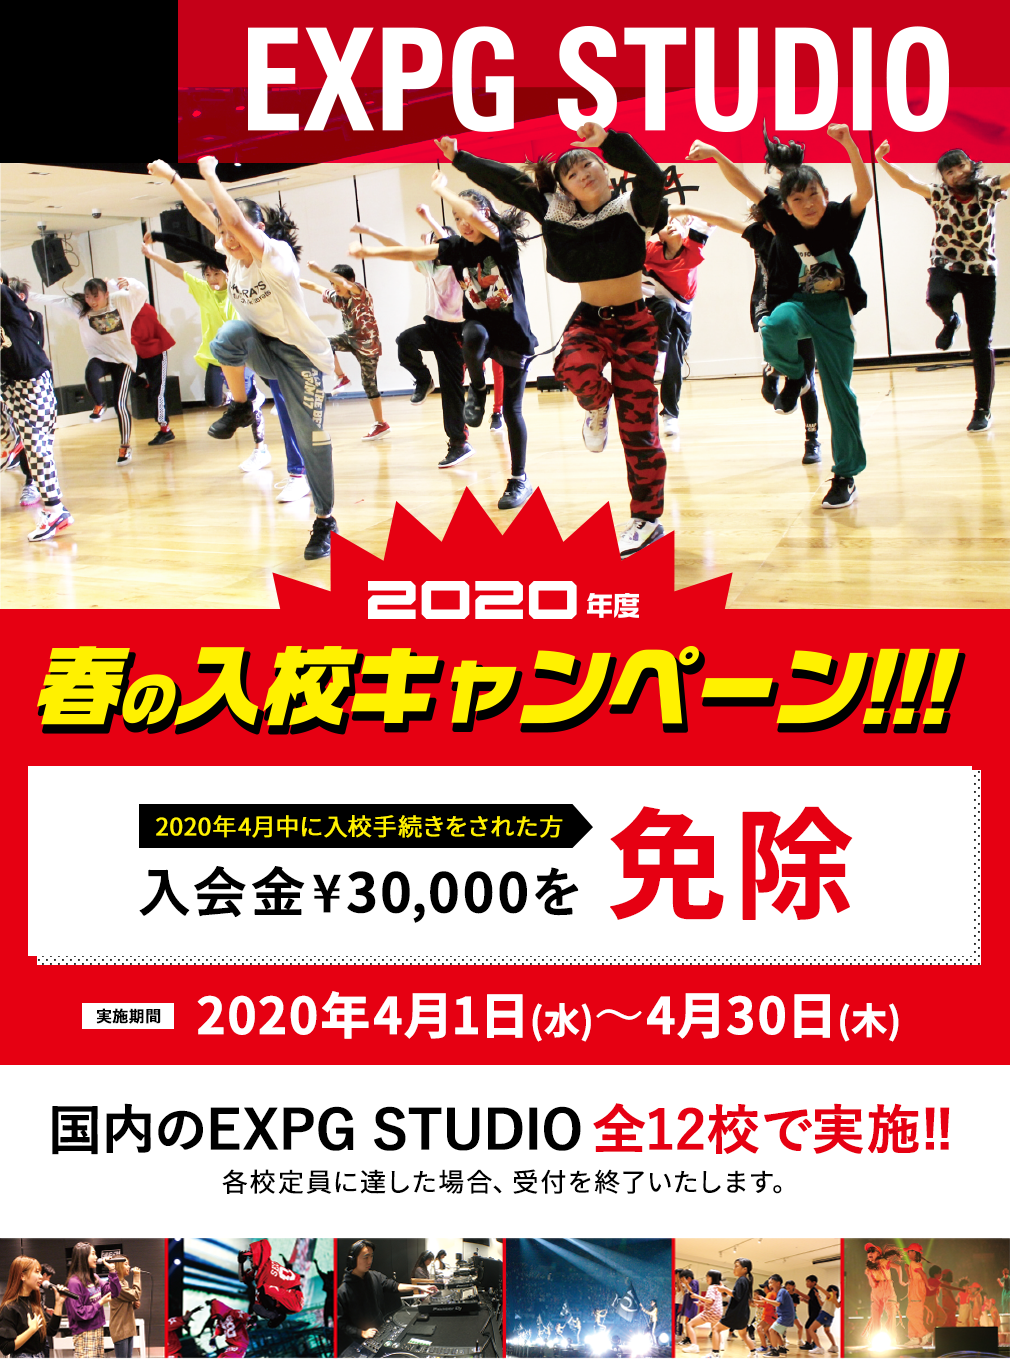 EXPG STUDIO 2020年度春の入校キャンペーン!!!